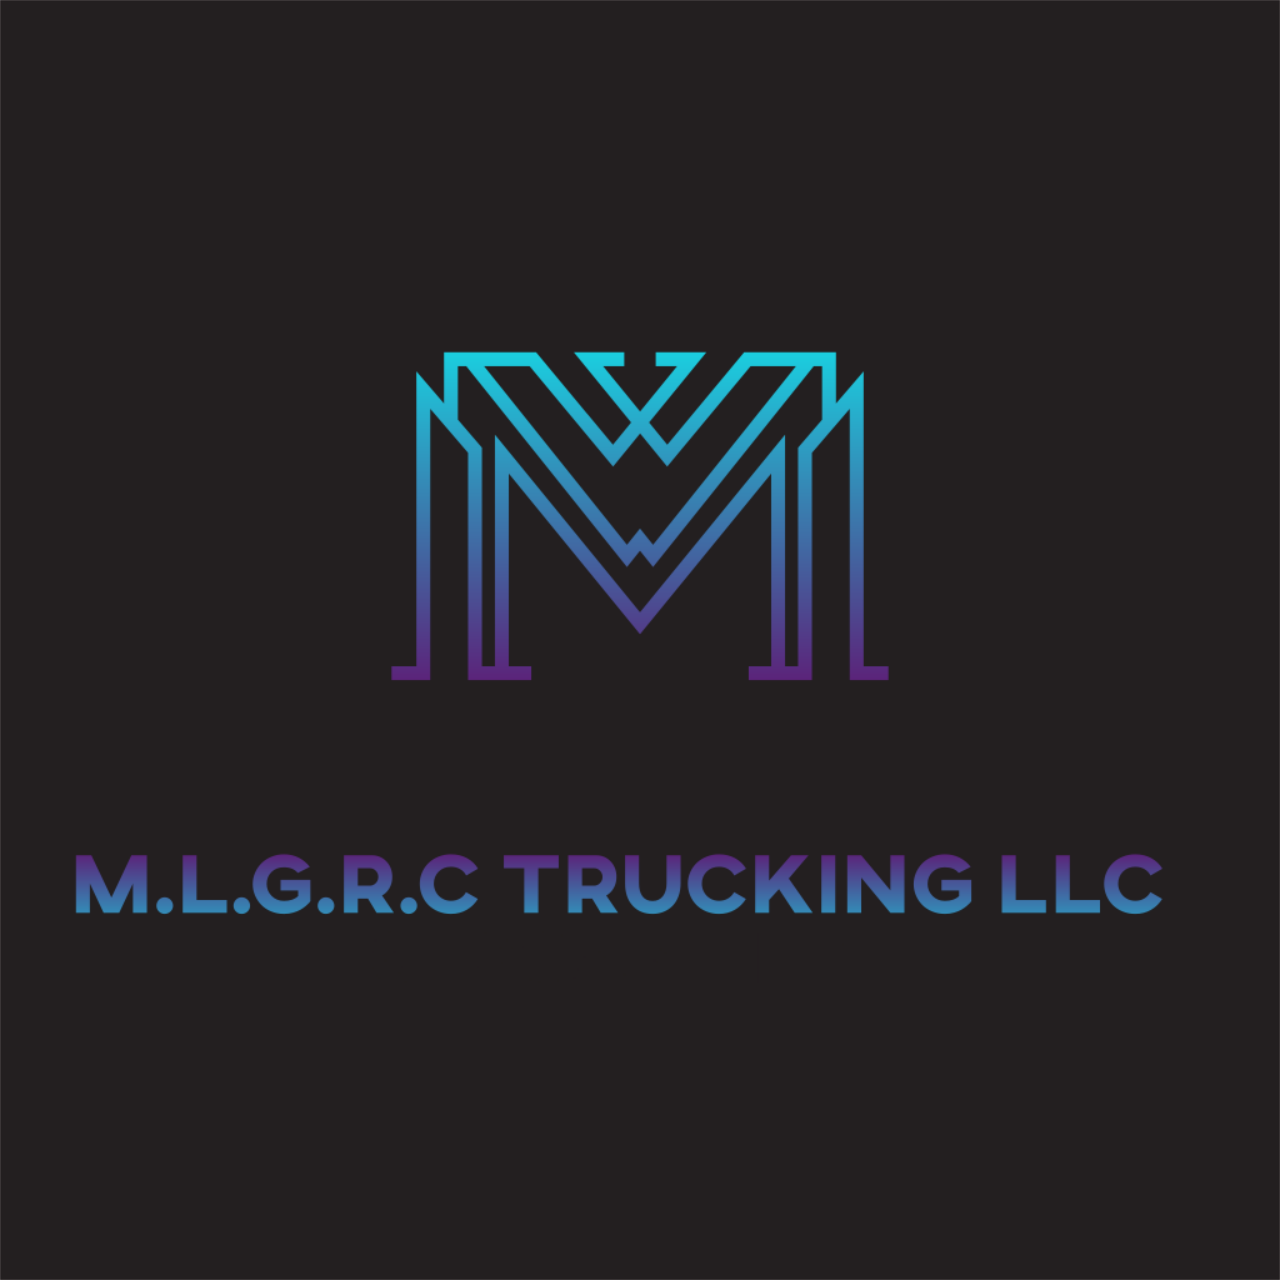 M.L.G.R.C Trucking LLC's logo